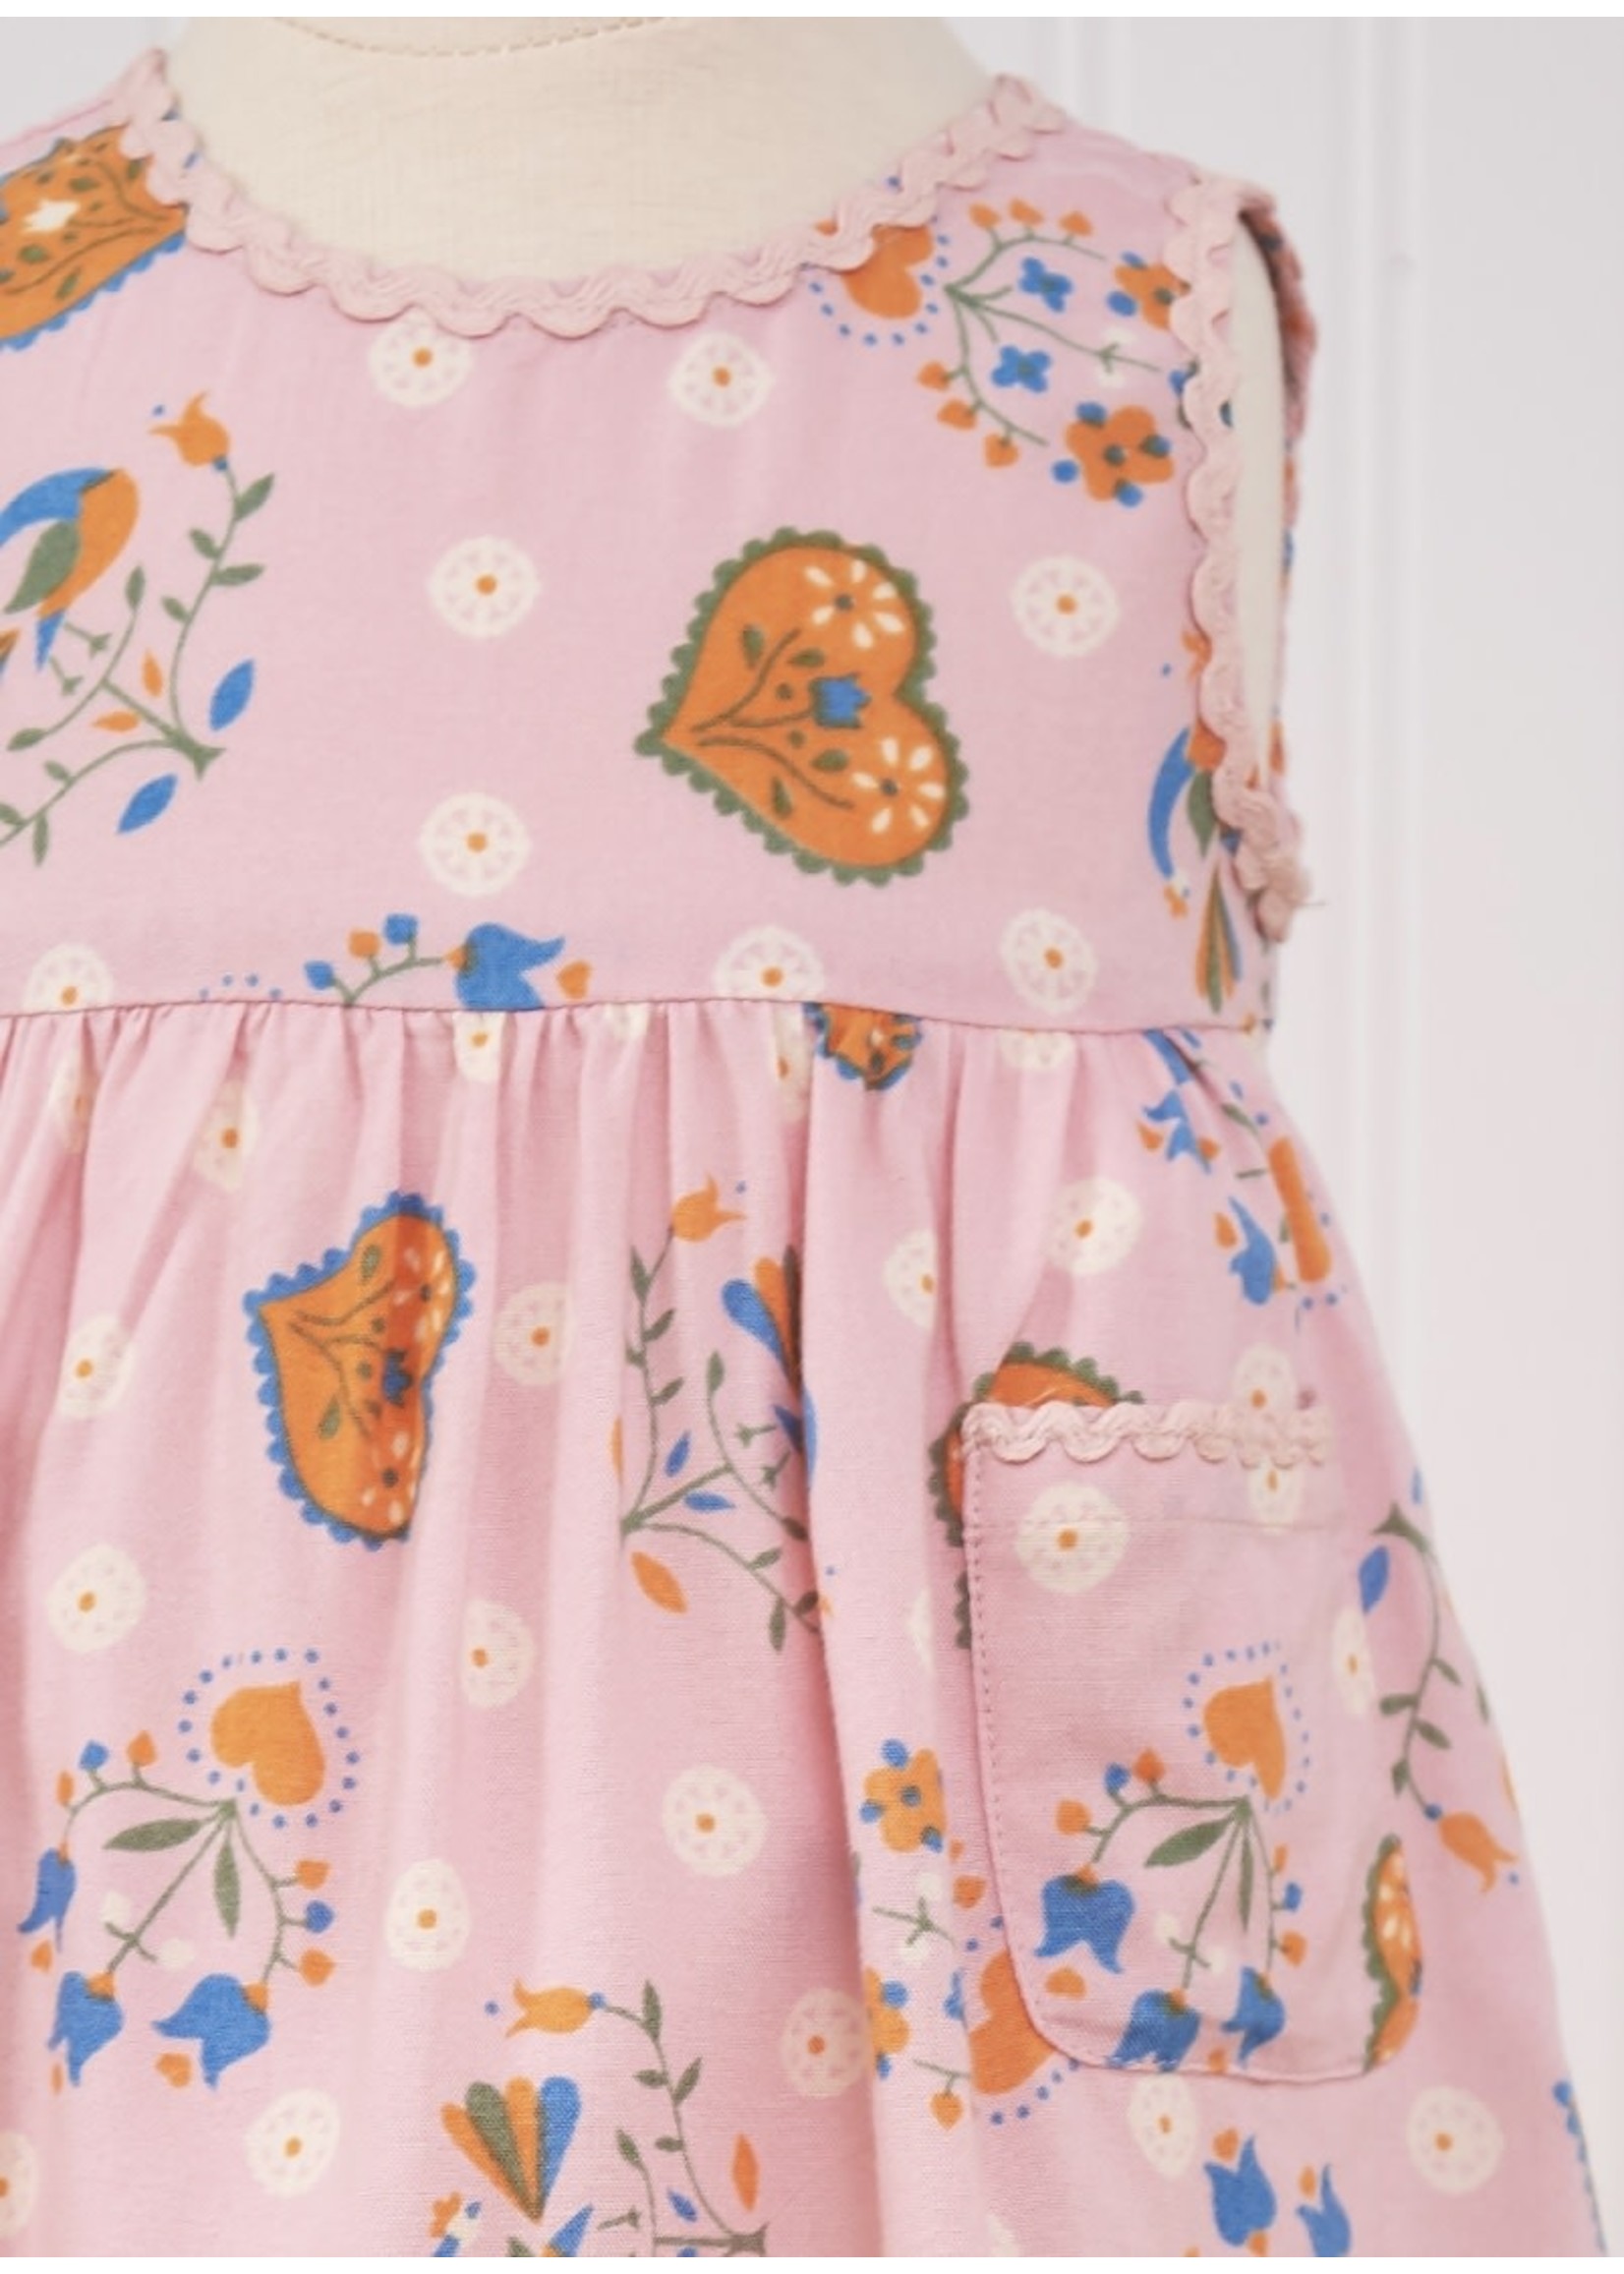 April Cornell Folklore Baby Dress